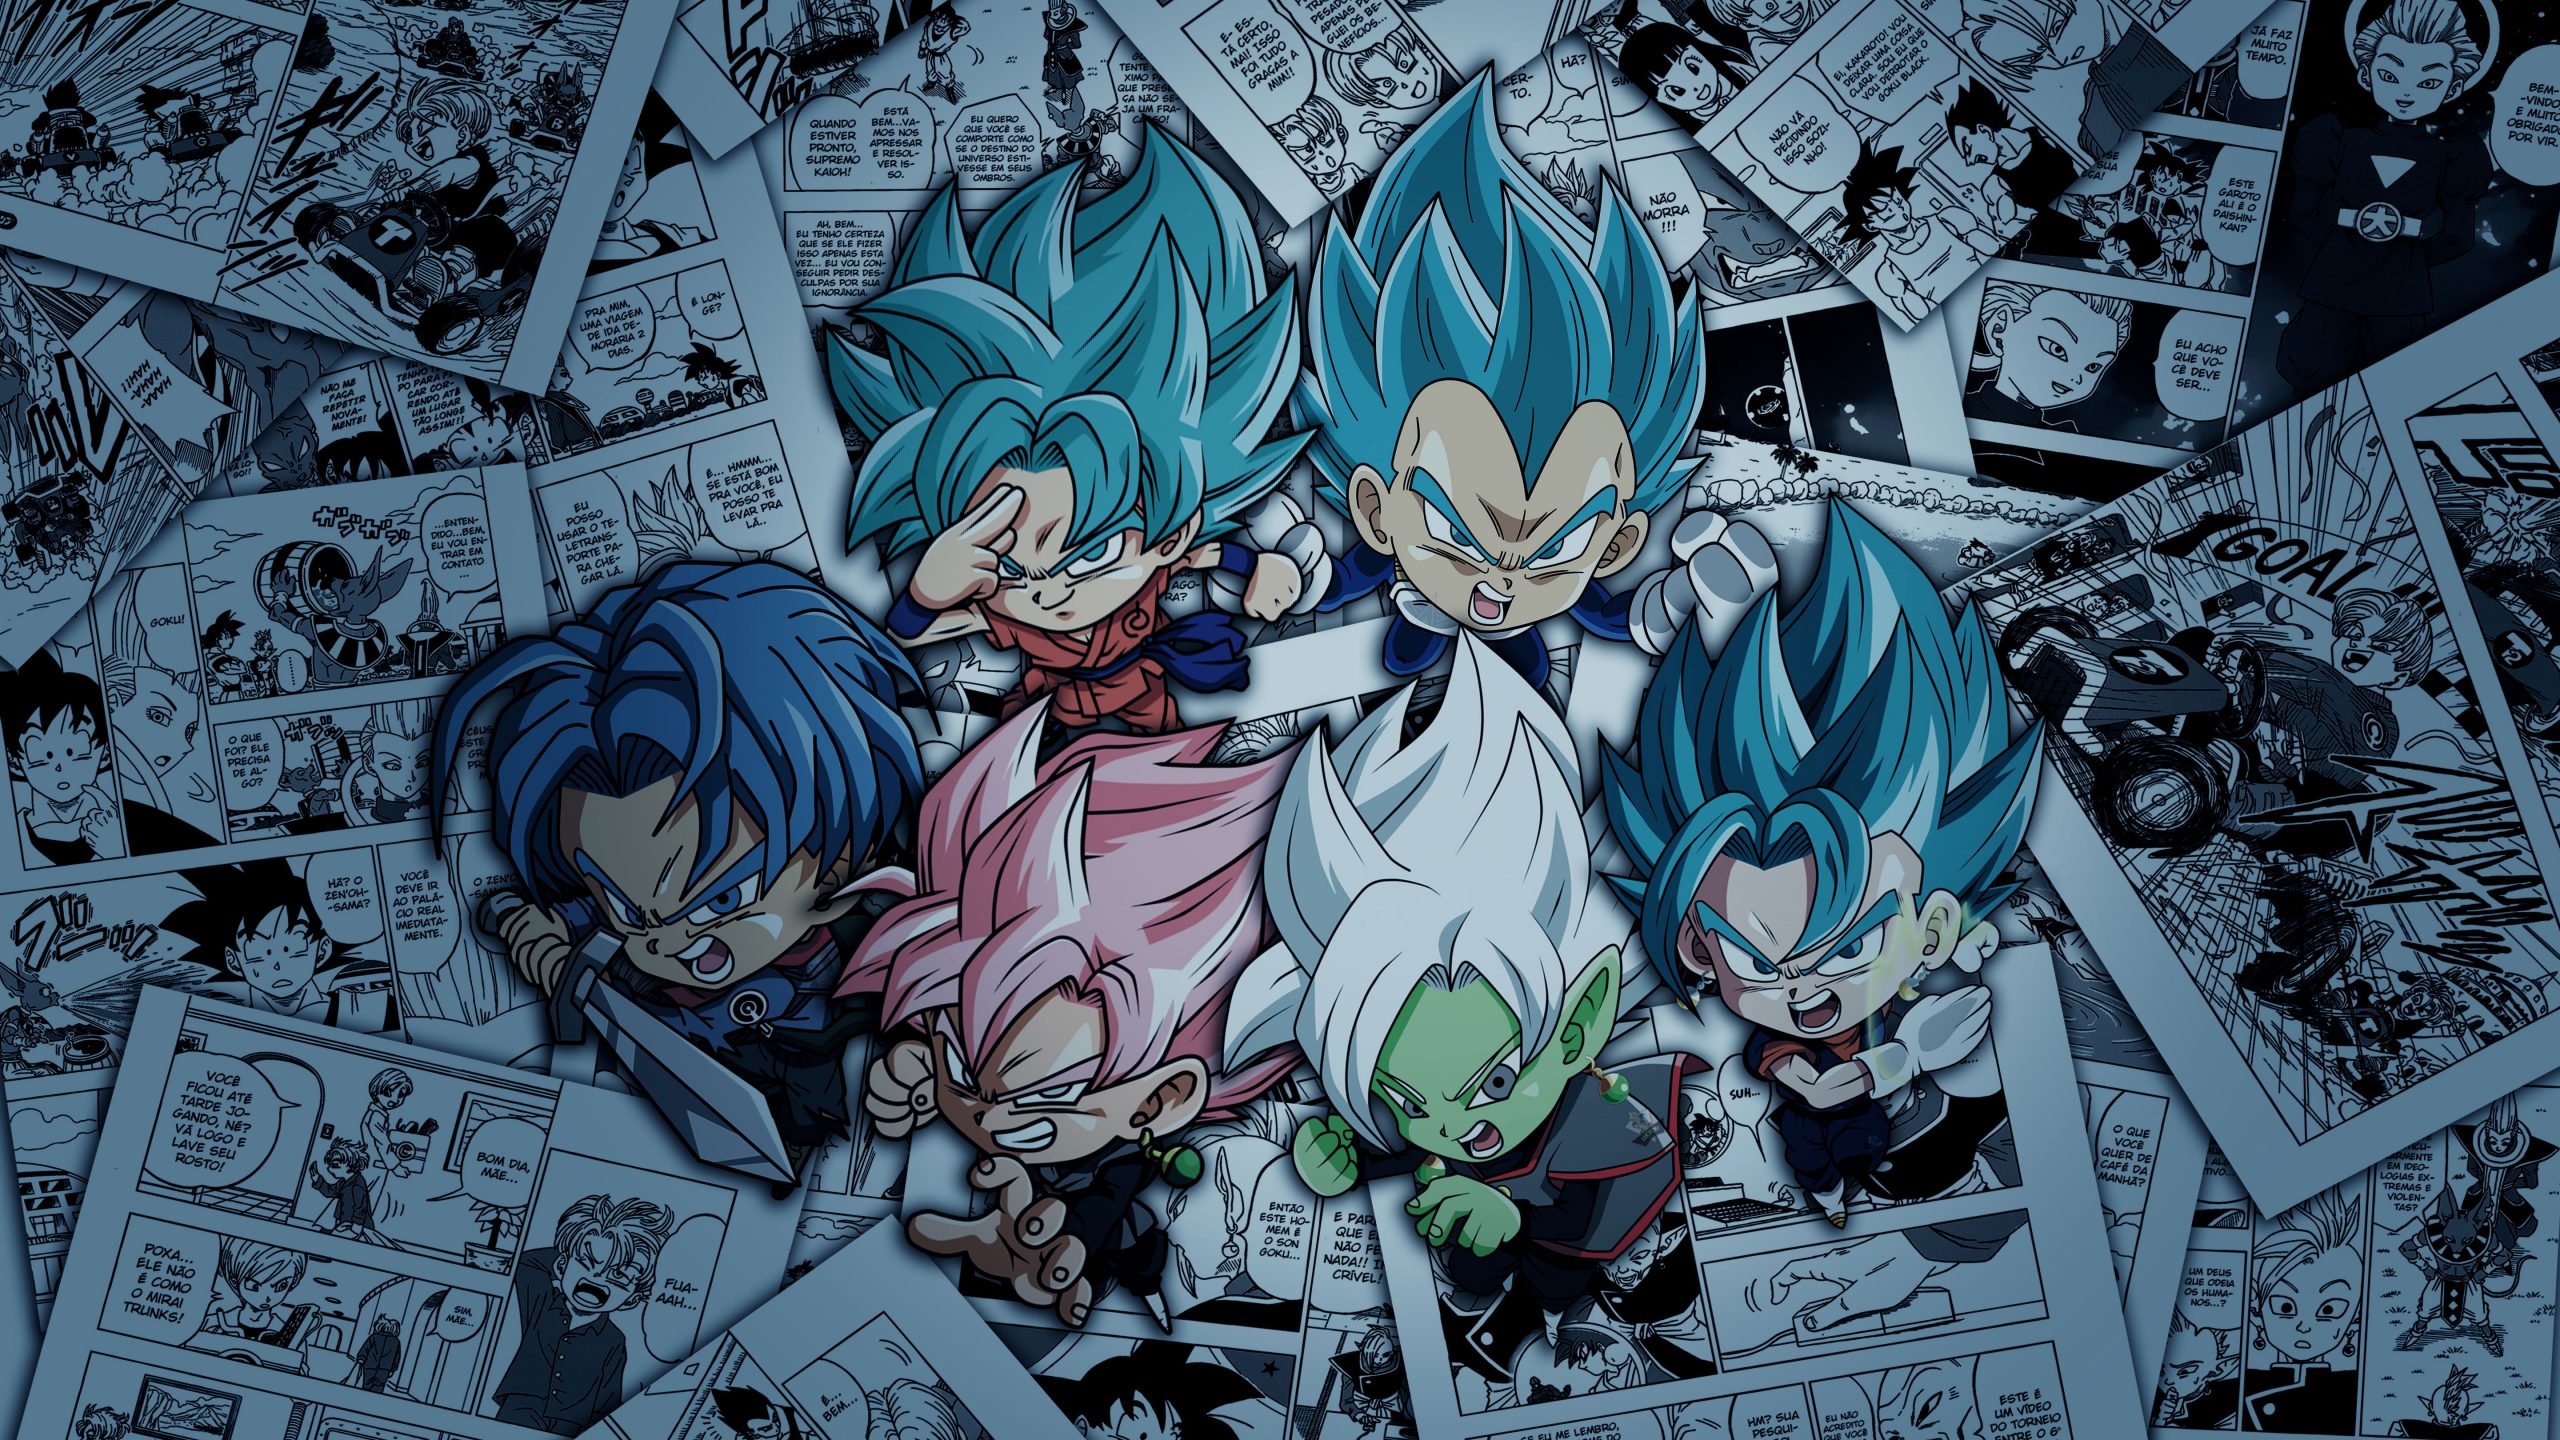 Dragon Ball Super chibi wallpaper, Super Saiyan Blue, Vegeta